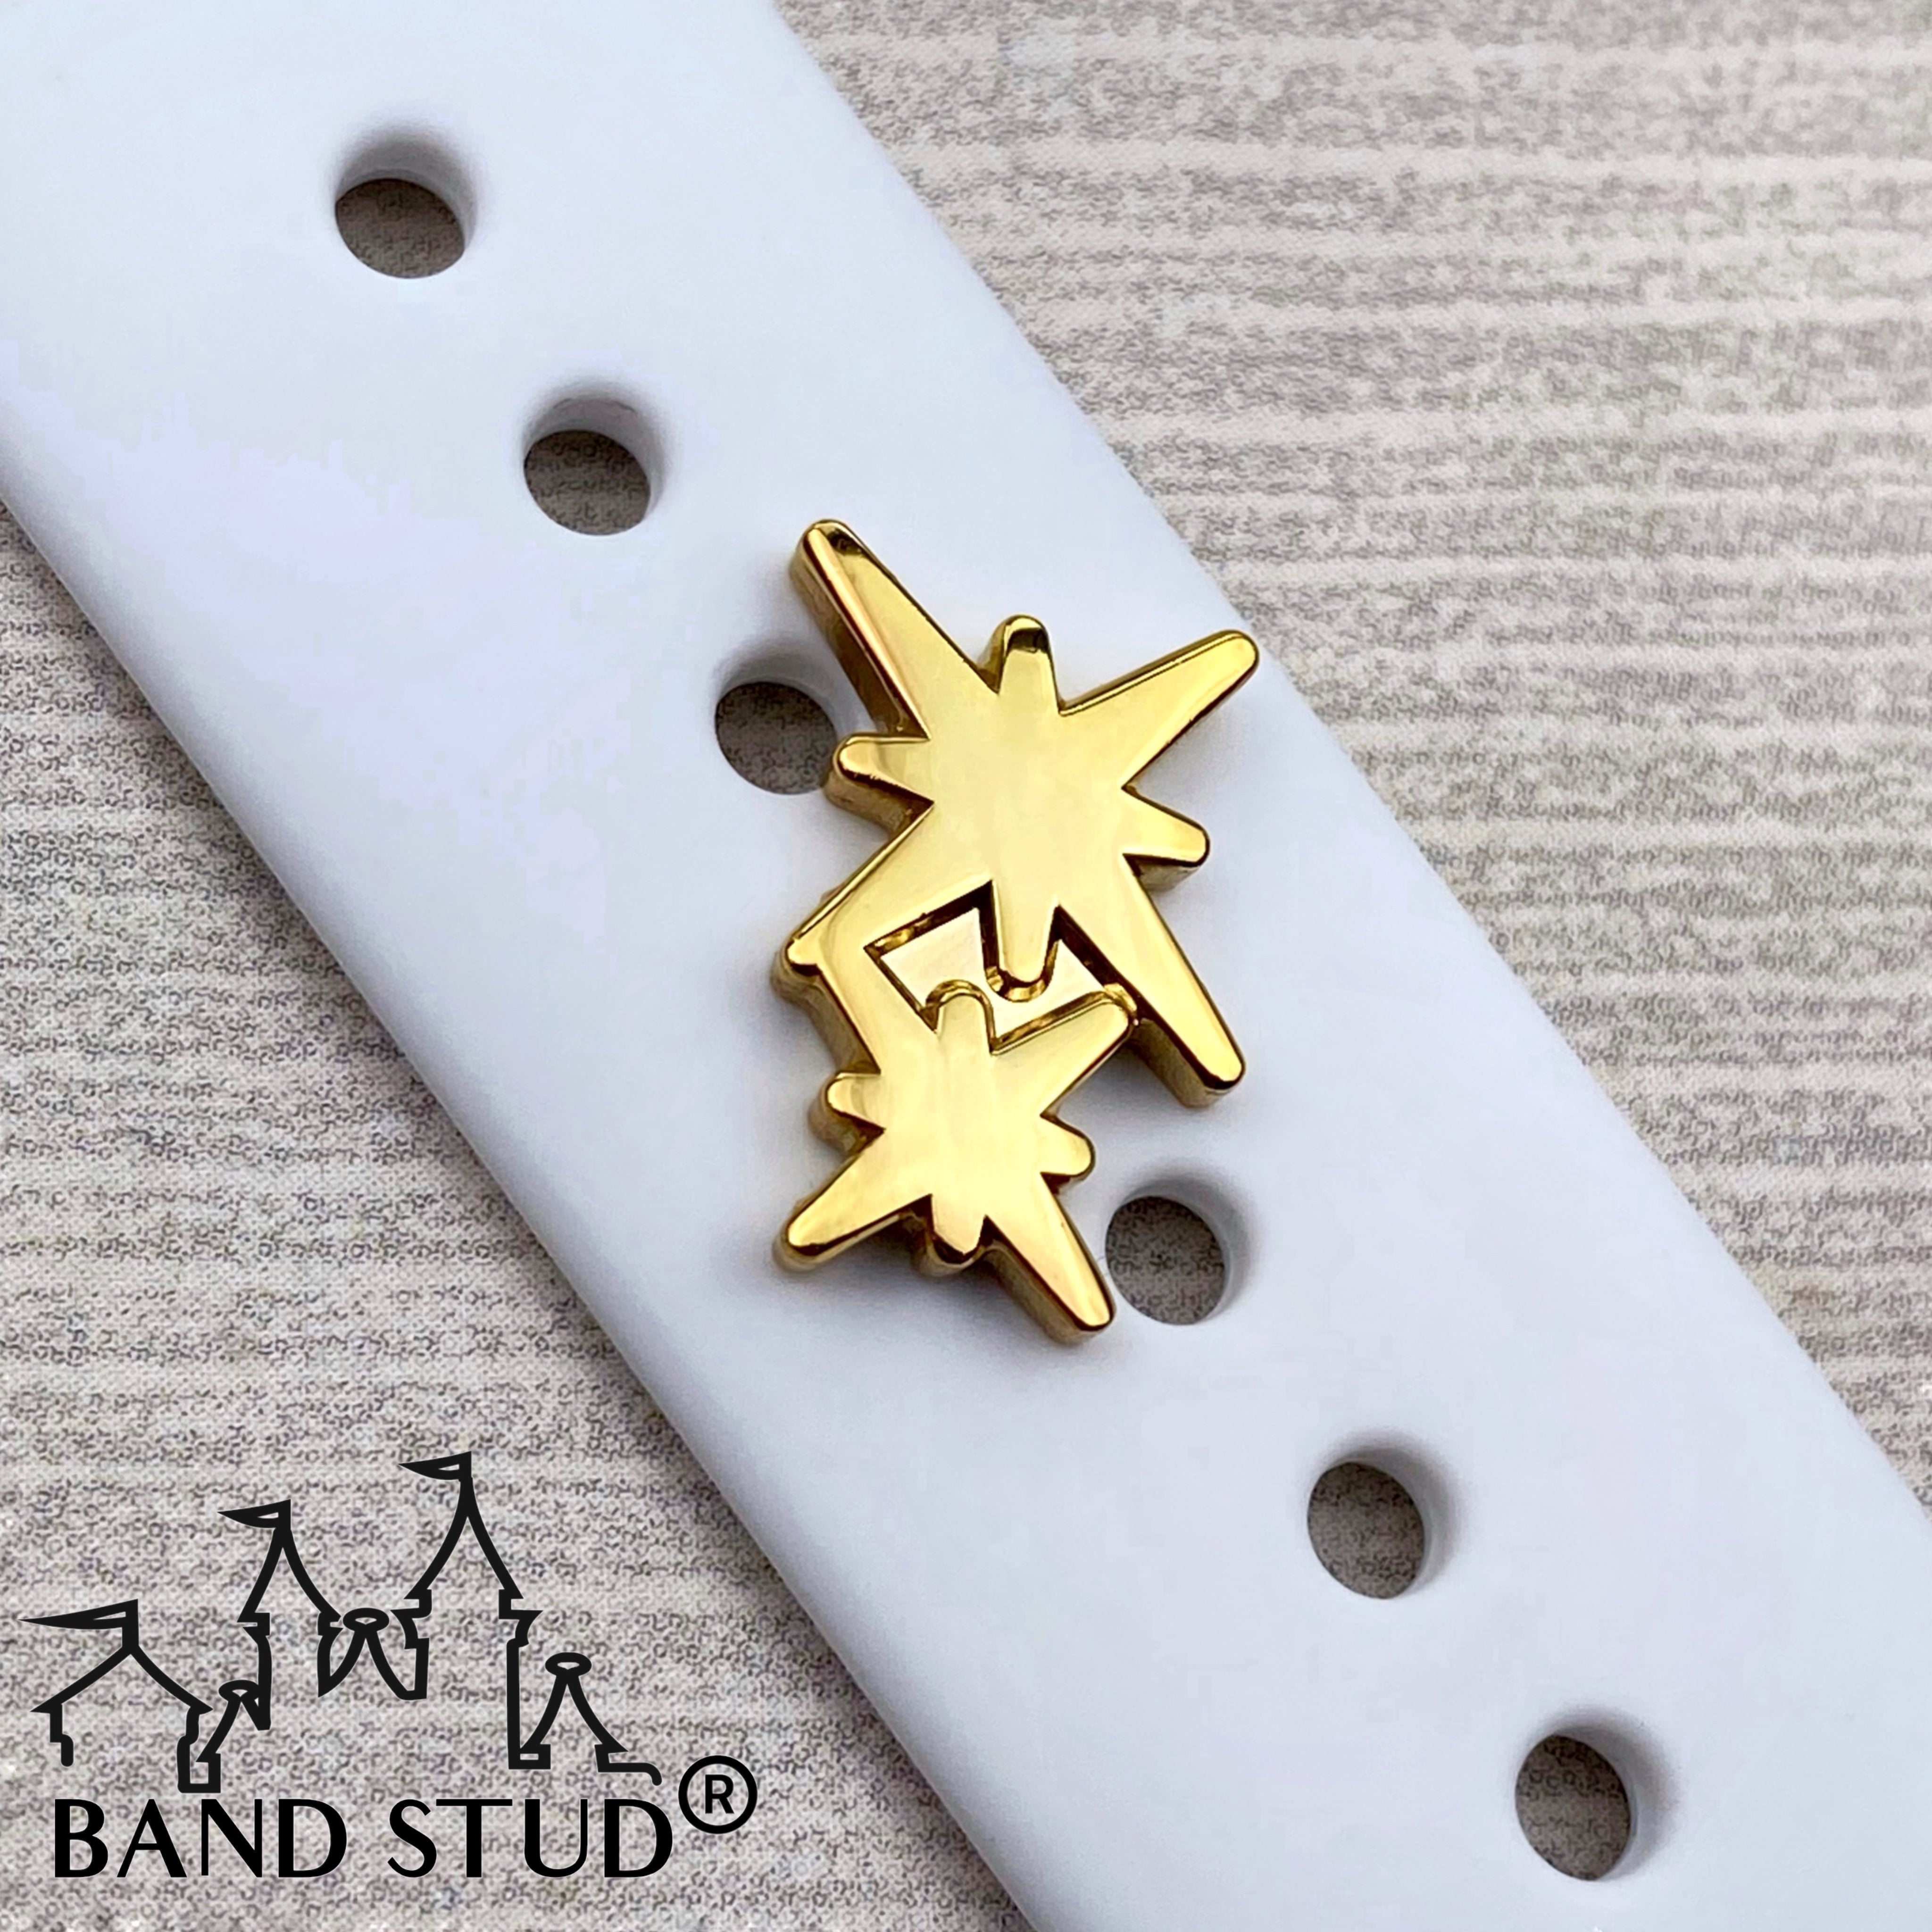 Band Stud® - Pixie dust